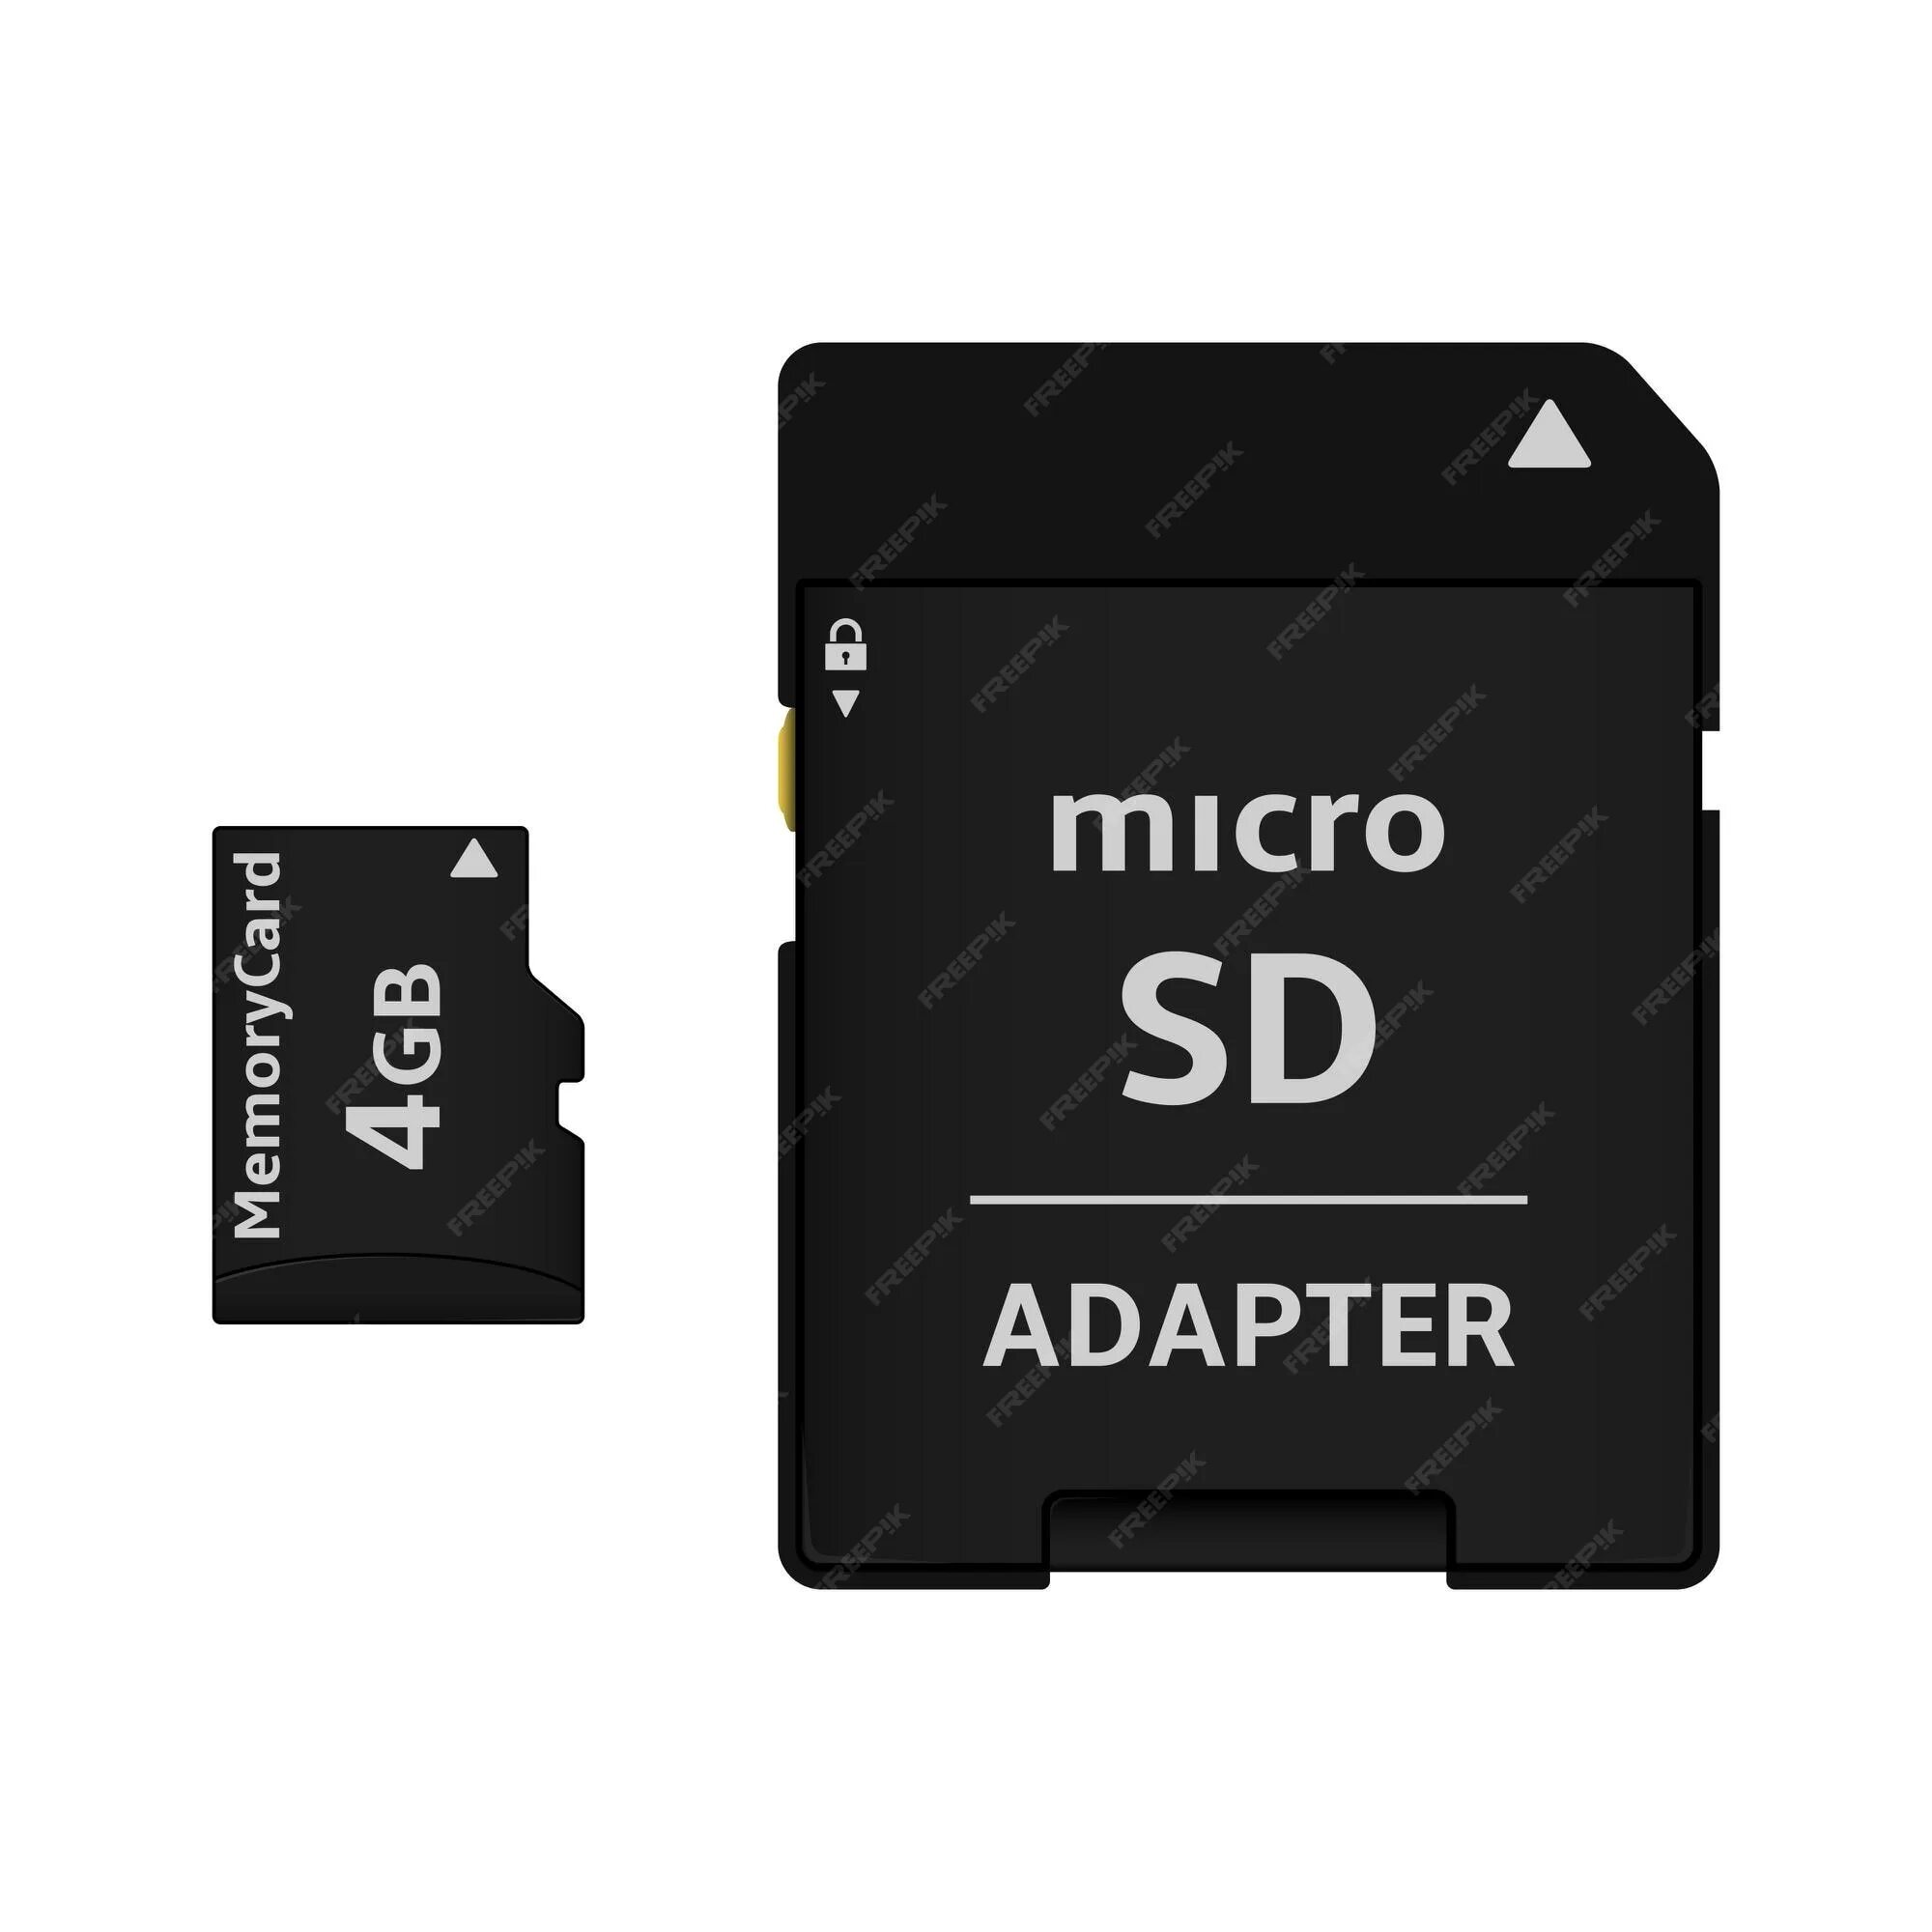 Дешевый микро. Адаптер микро СД на СД. Адаптер для SD карты. Адаптер SD MICROSD. Переходник на карту памяти микро СД.